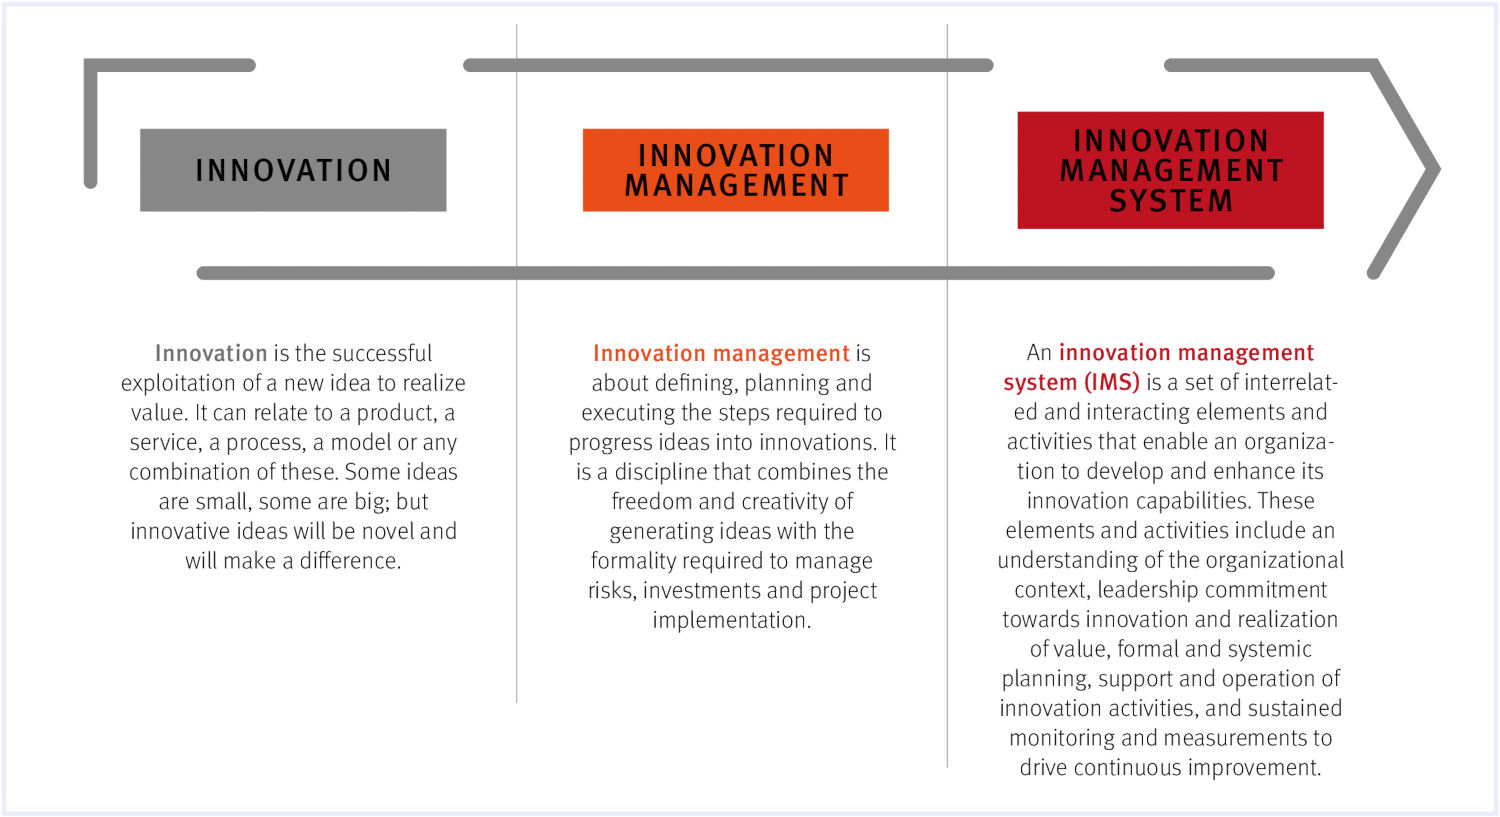 Innovation Management System - Guidance